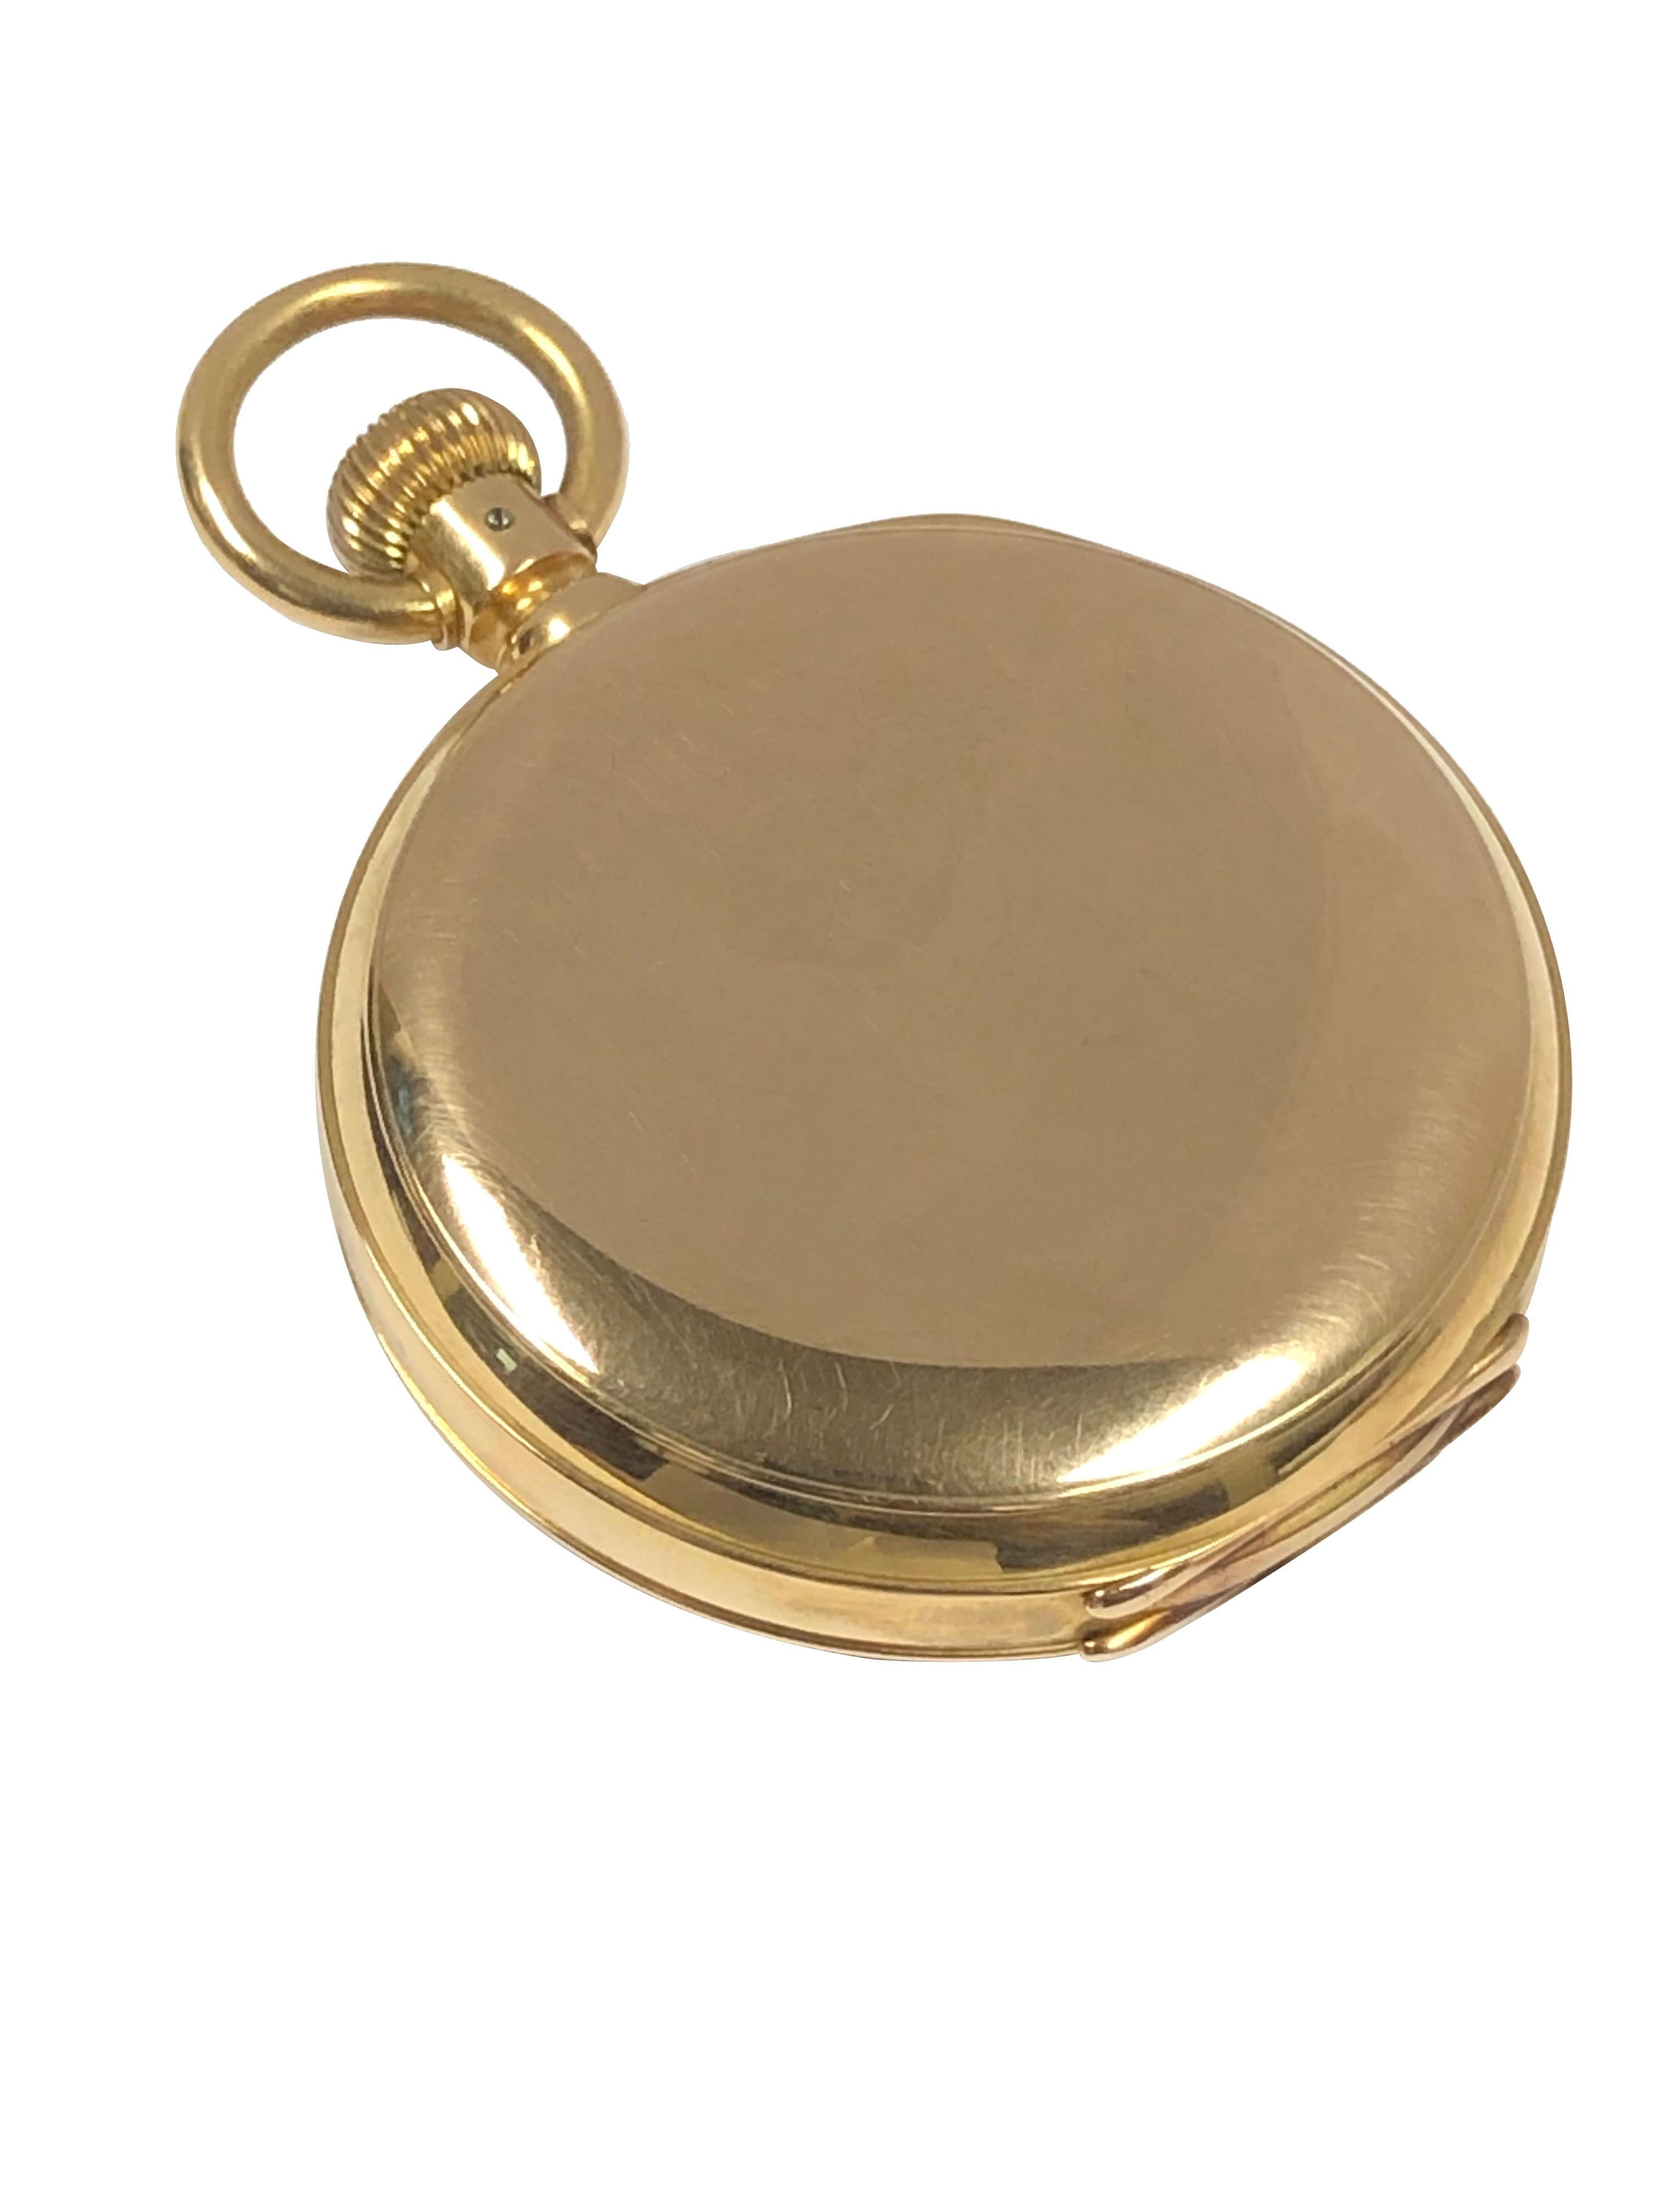 Vacheron Constantin Vintage Large 18k Gold cased Pocket Watch 1890s For Sale 2